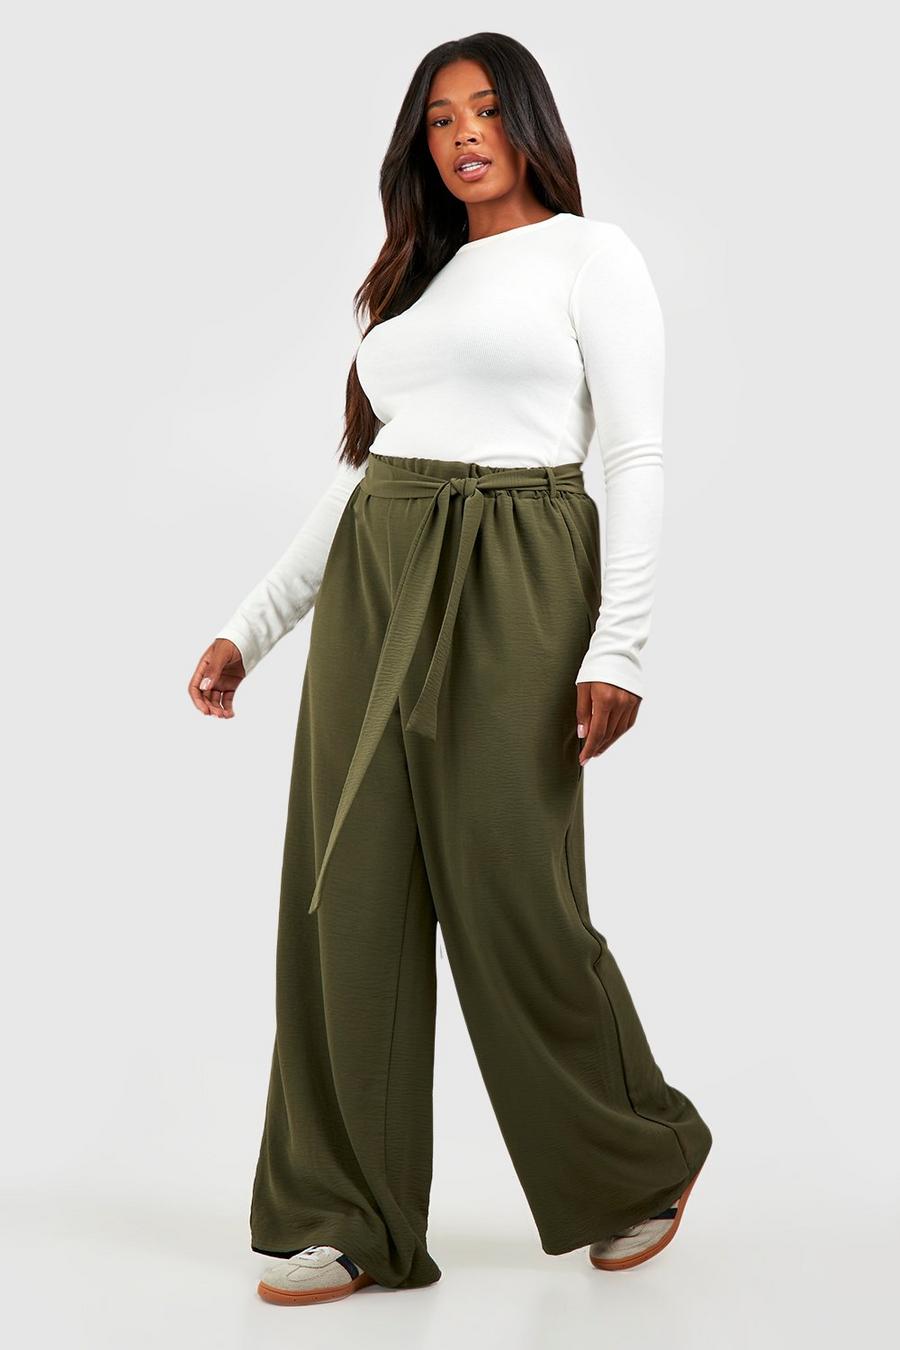 https://media.boohoo.com/i/boohoo/gzz64237_khaki_xl/female-khaki-plus-woven-textured-belted-wide-leg-pants/?w=900&qlt=default&fmt.jp2.qlt=70&fmt=auto&sm=fit